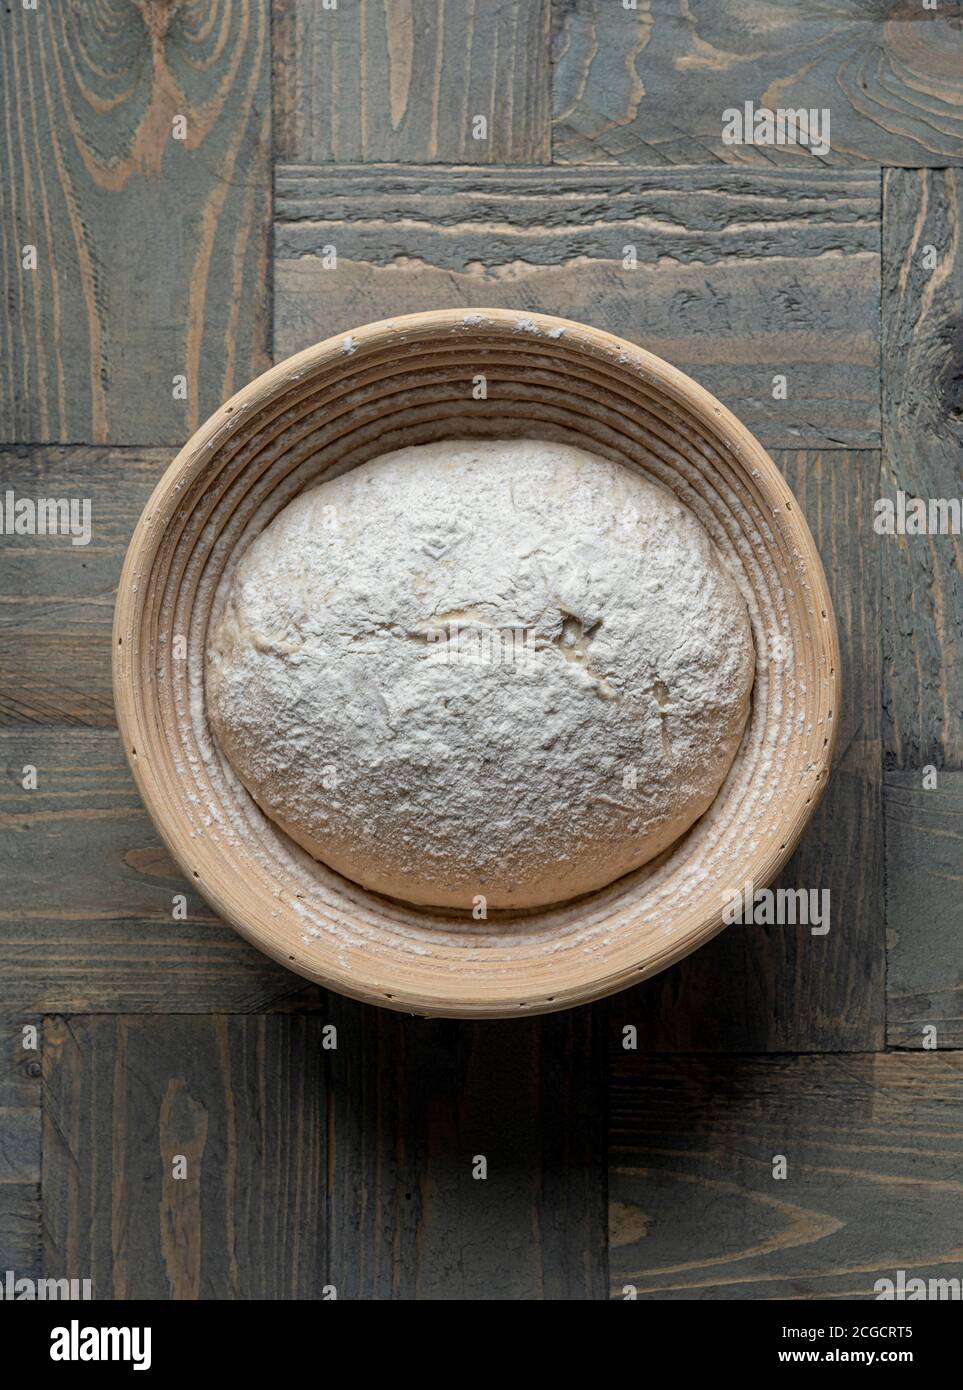 Sourdough bread dough in wicker banneton proving basket on wooden background Stock Photo